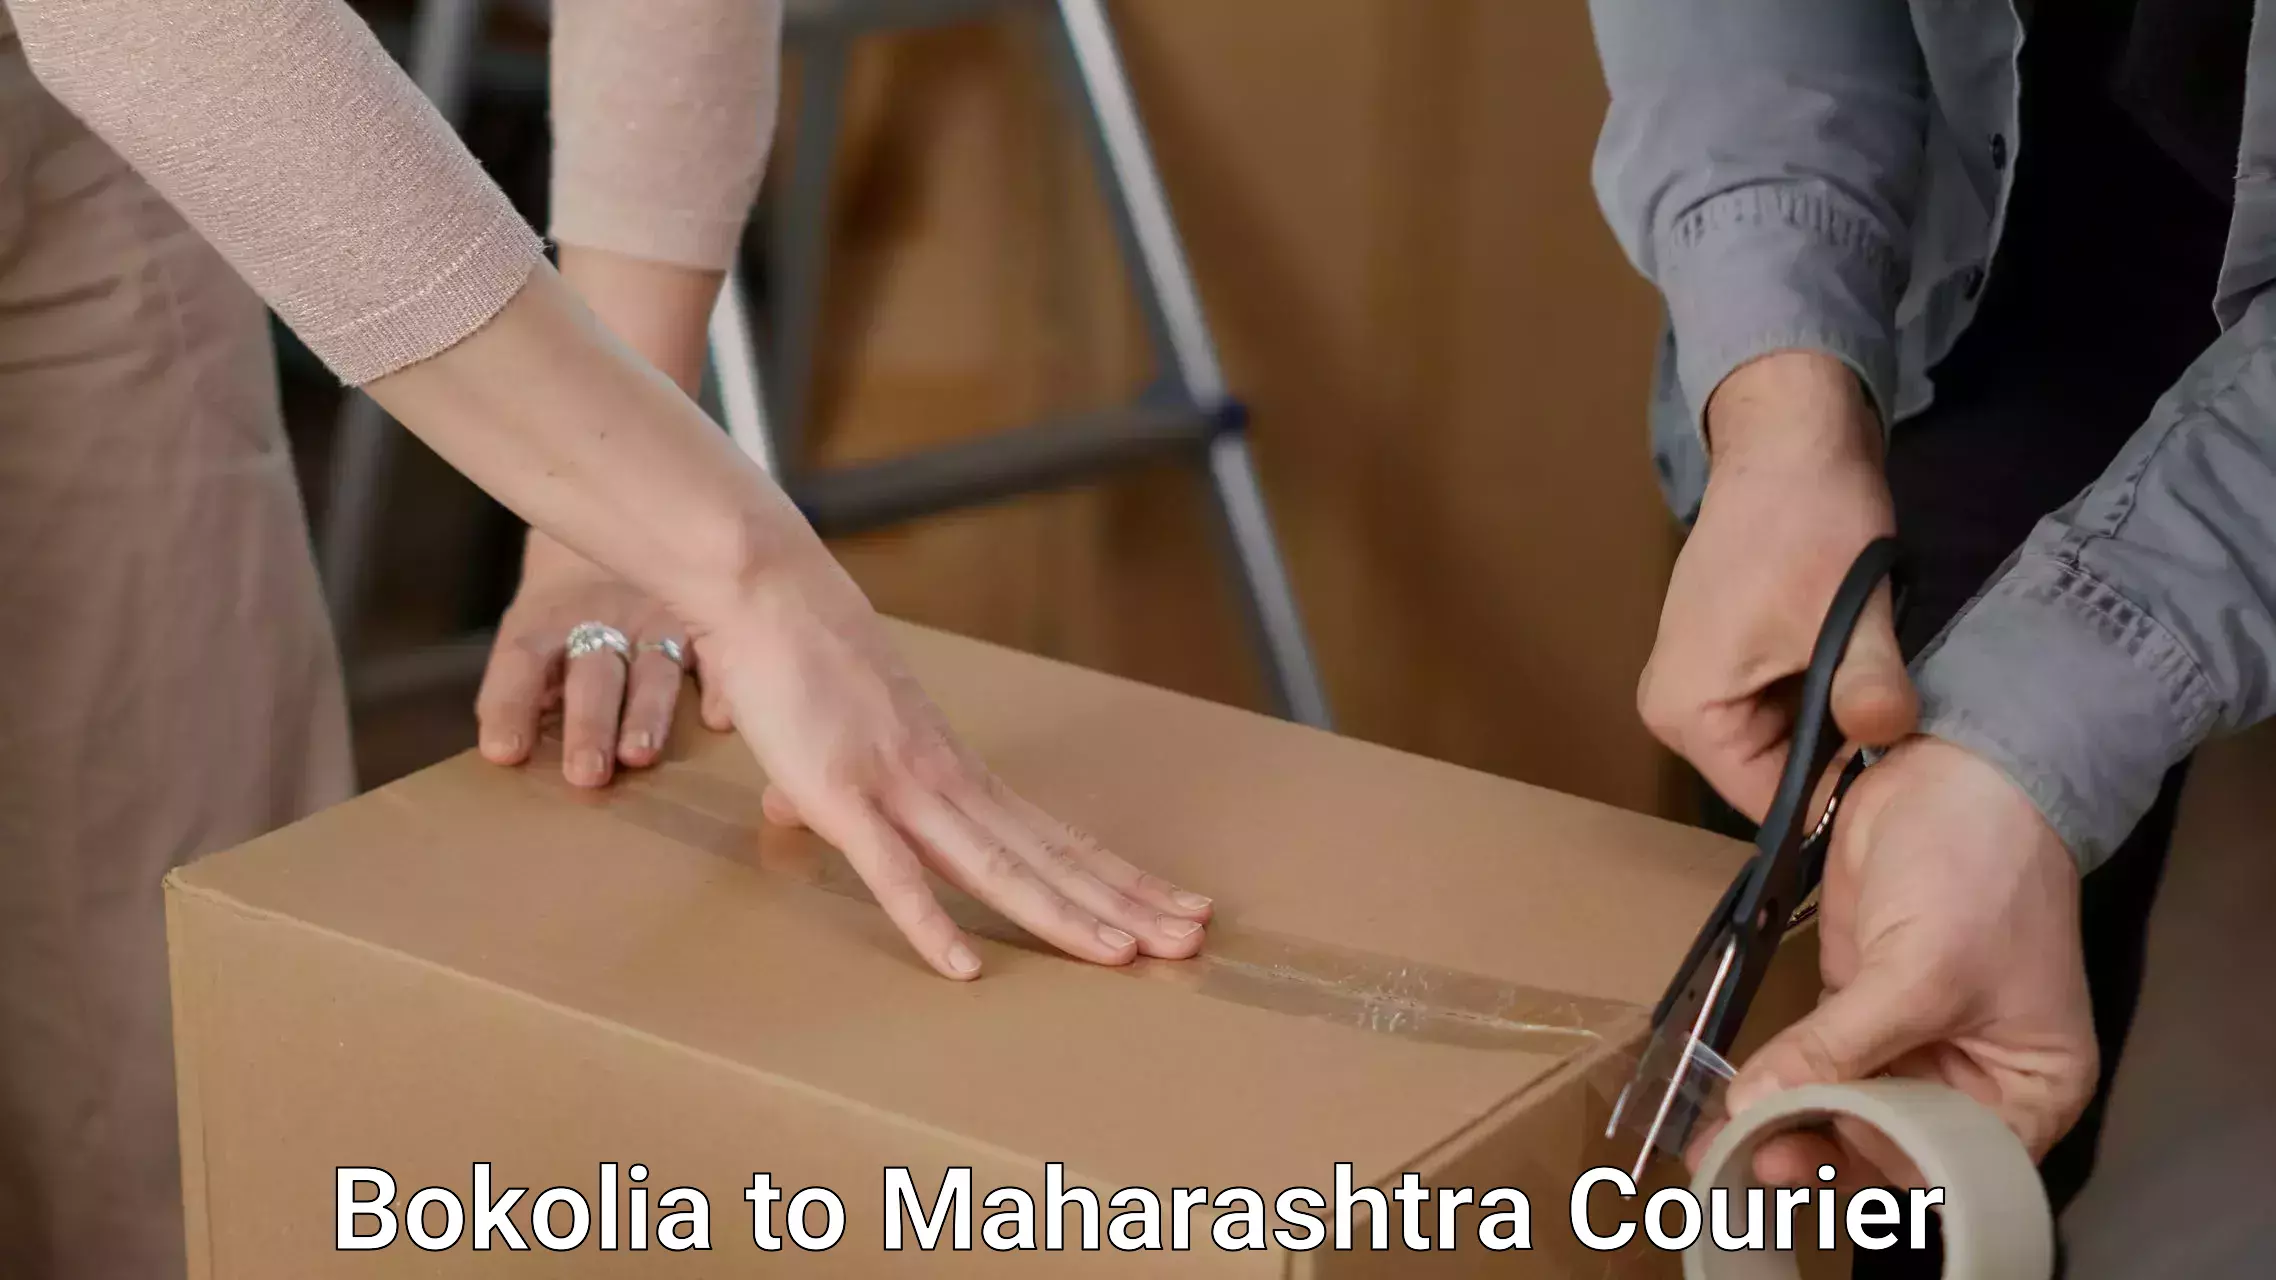 Furniture delivery service Bokolia to Maharashtra